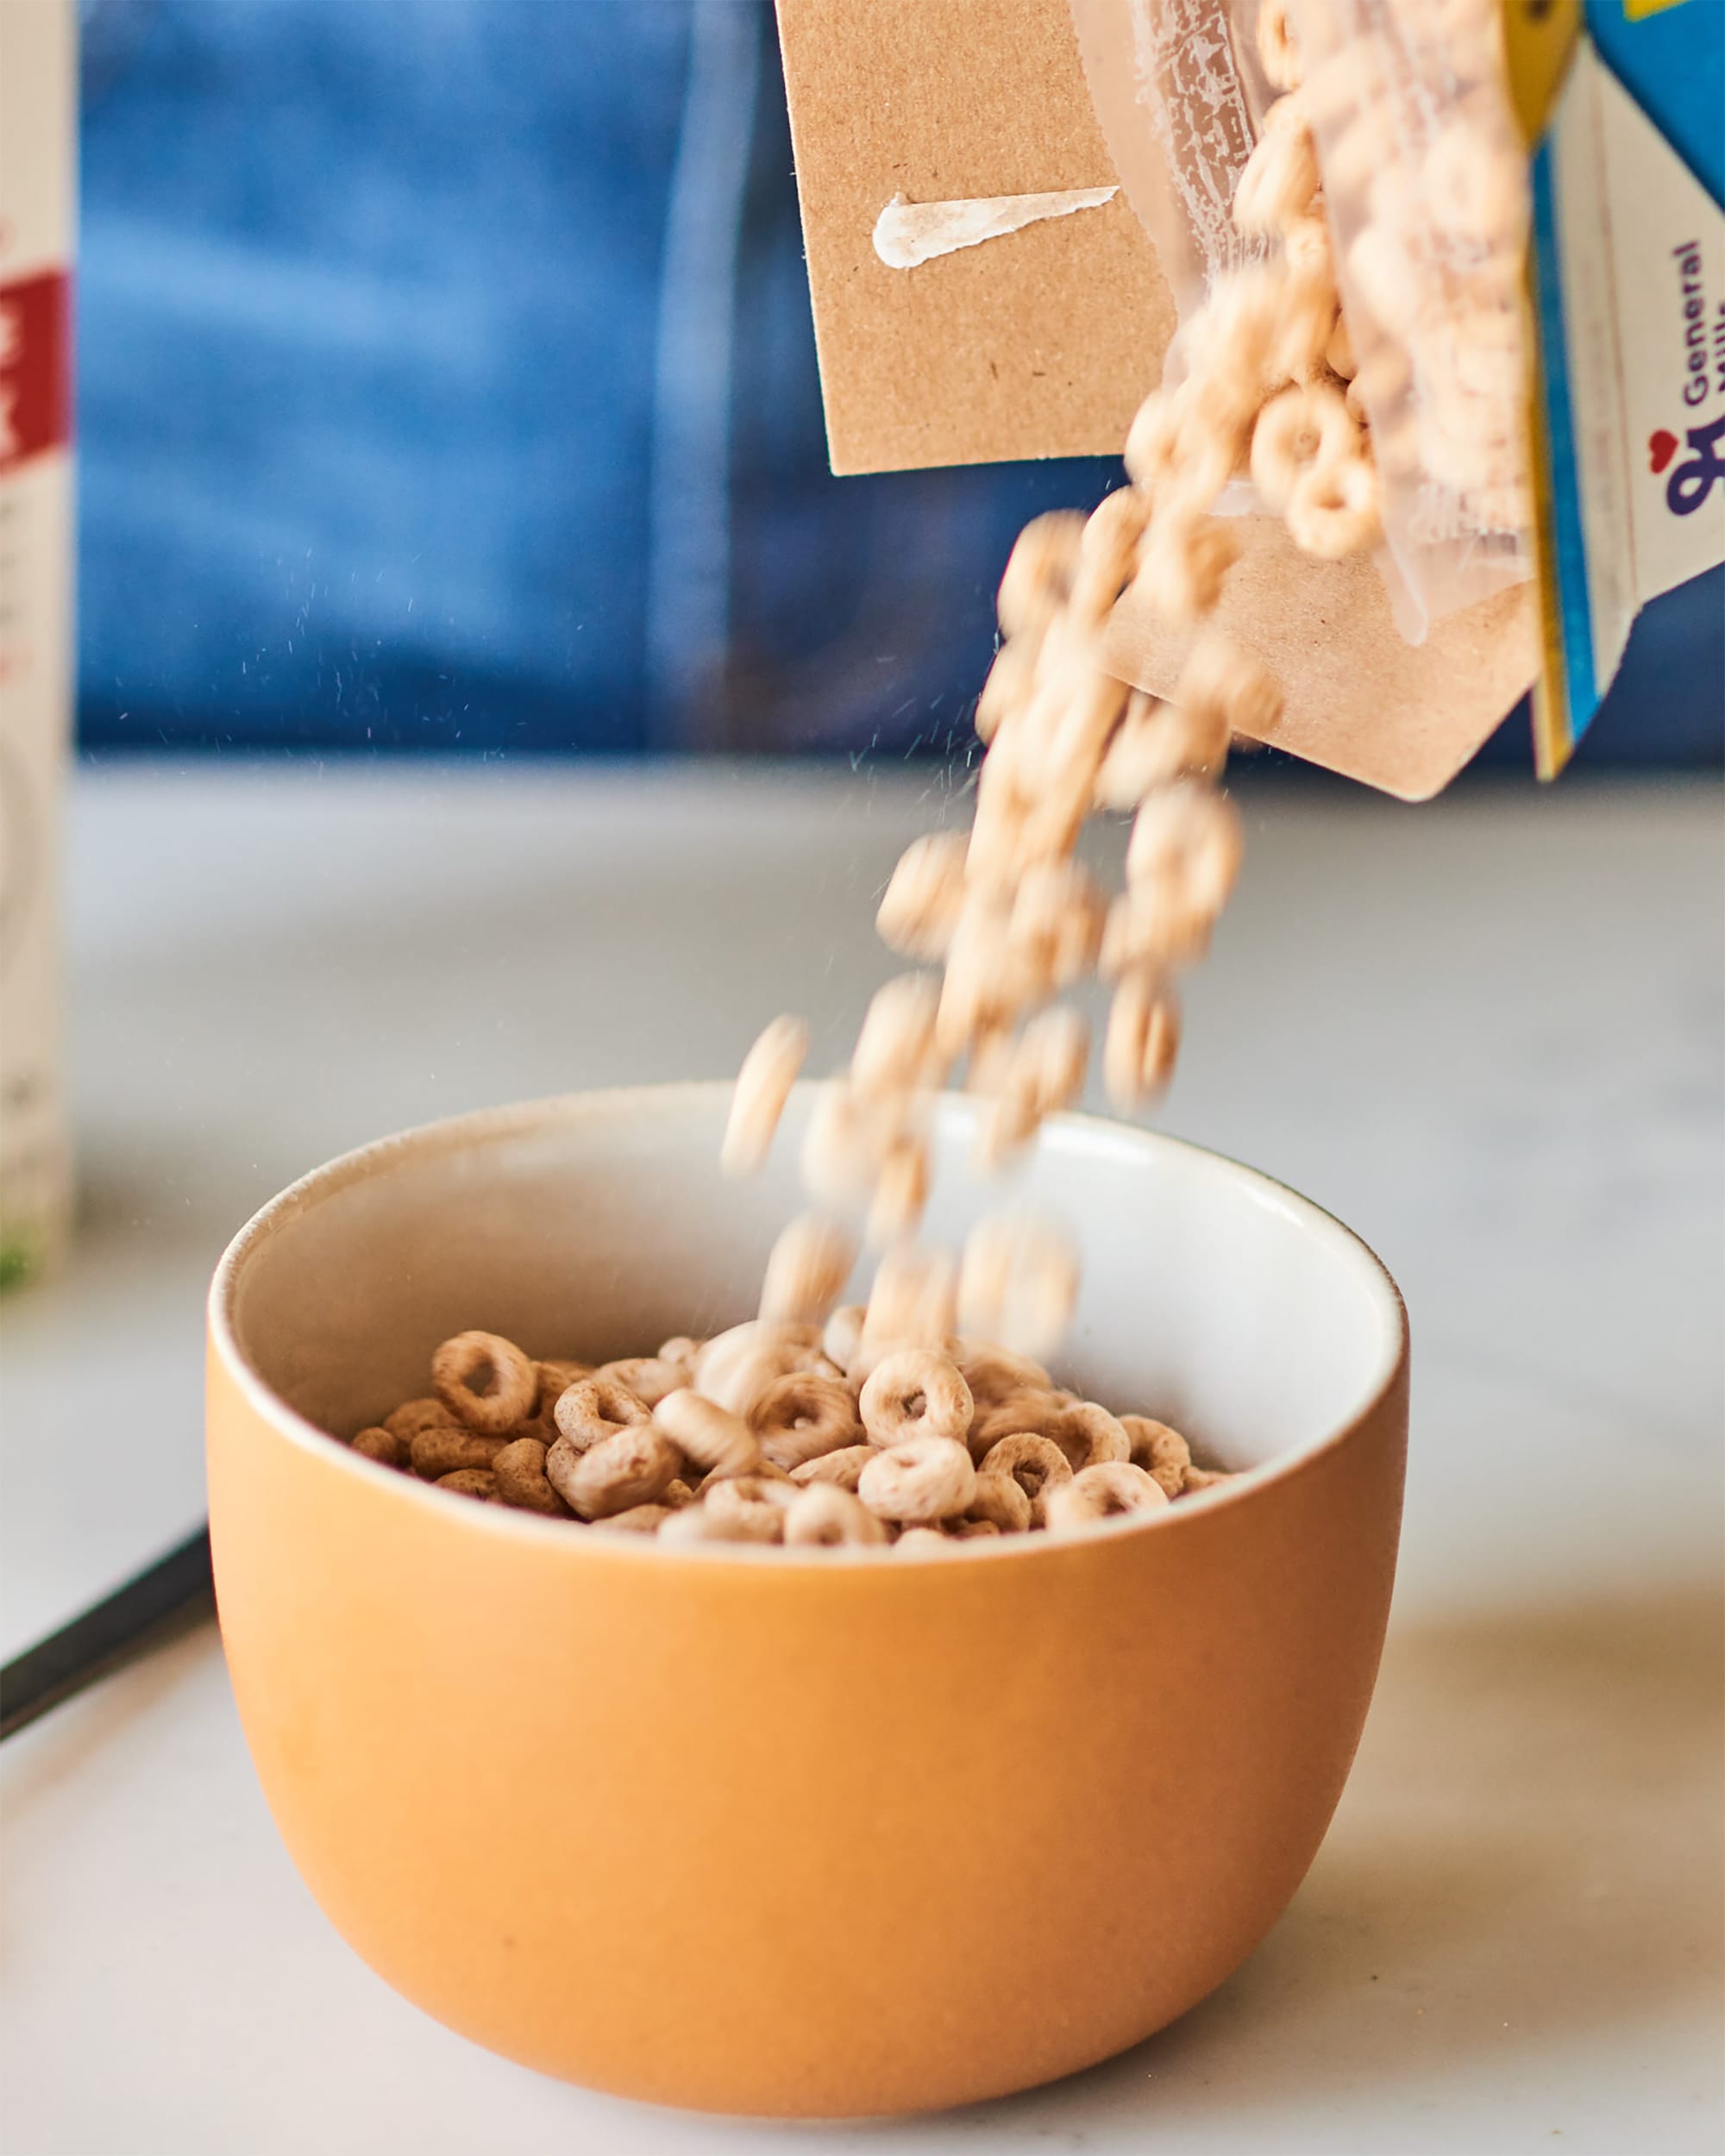 Is it Gluten Free Trader Joe's Organic Raisin Bran Clusters Cereal